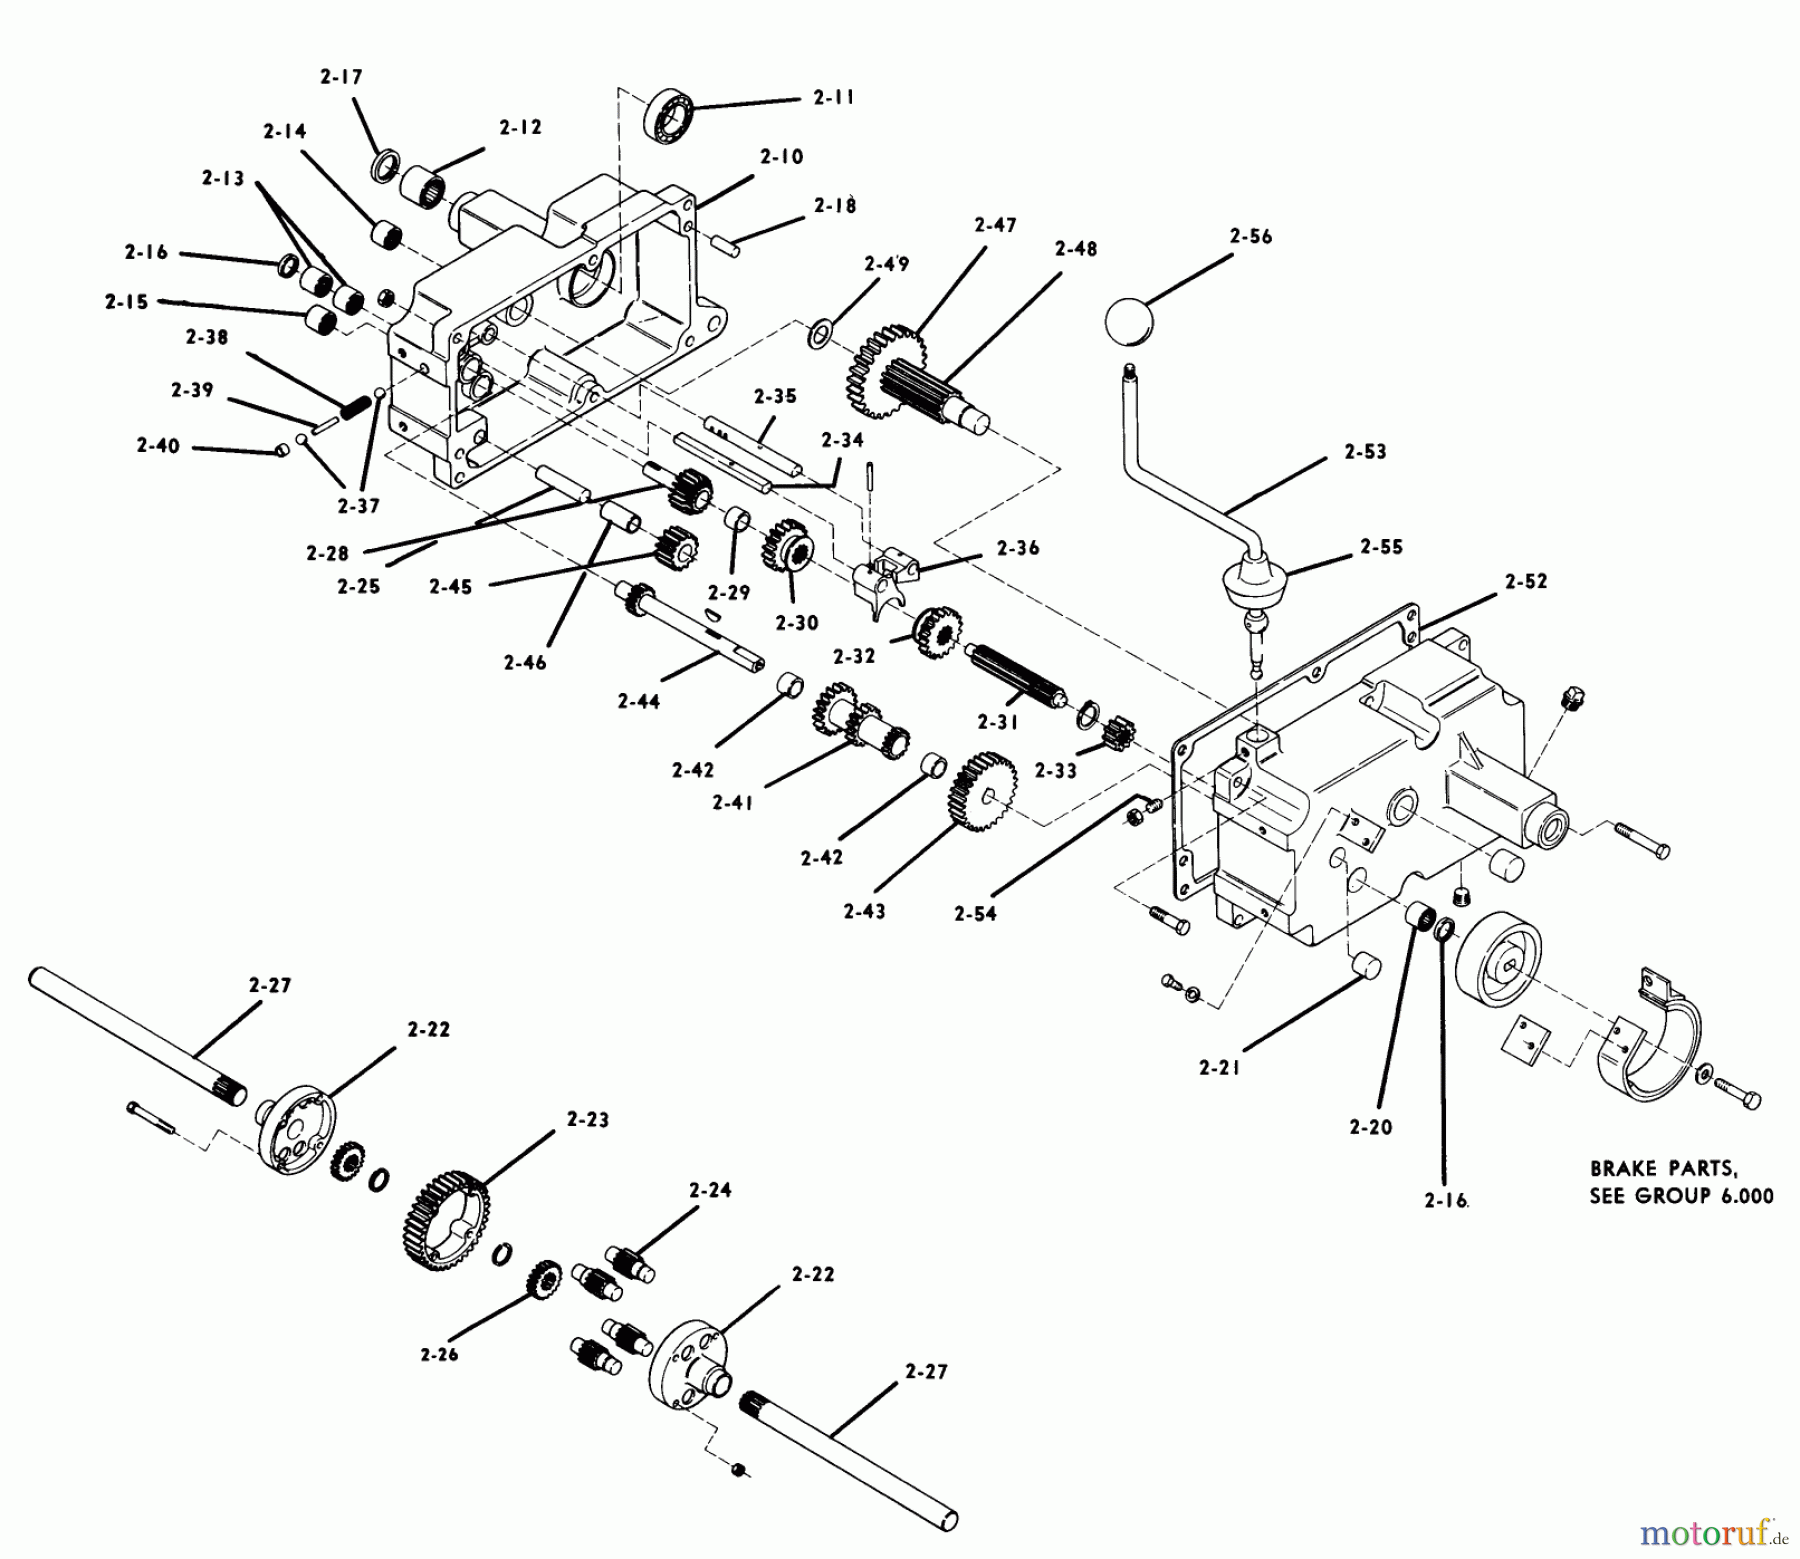  Toro Neu Mowers, Lawn & Garden Tractor Seite 1 1-0141 (B-80) - Toro B-80 4-Speed Tractor, 1975 B-100 PARTS MANUAL 2.000 TRANSMISSION (FIG. 2)